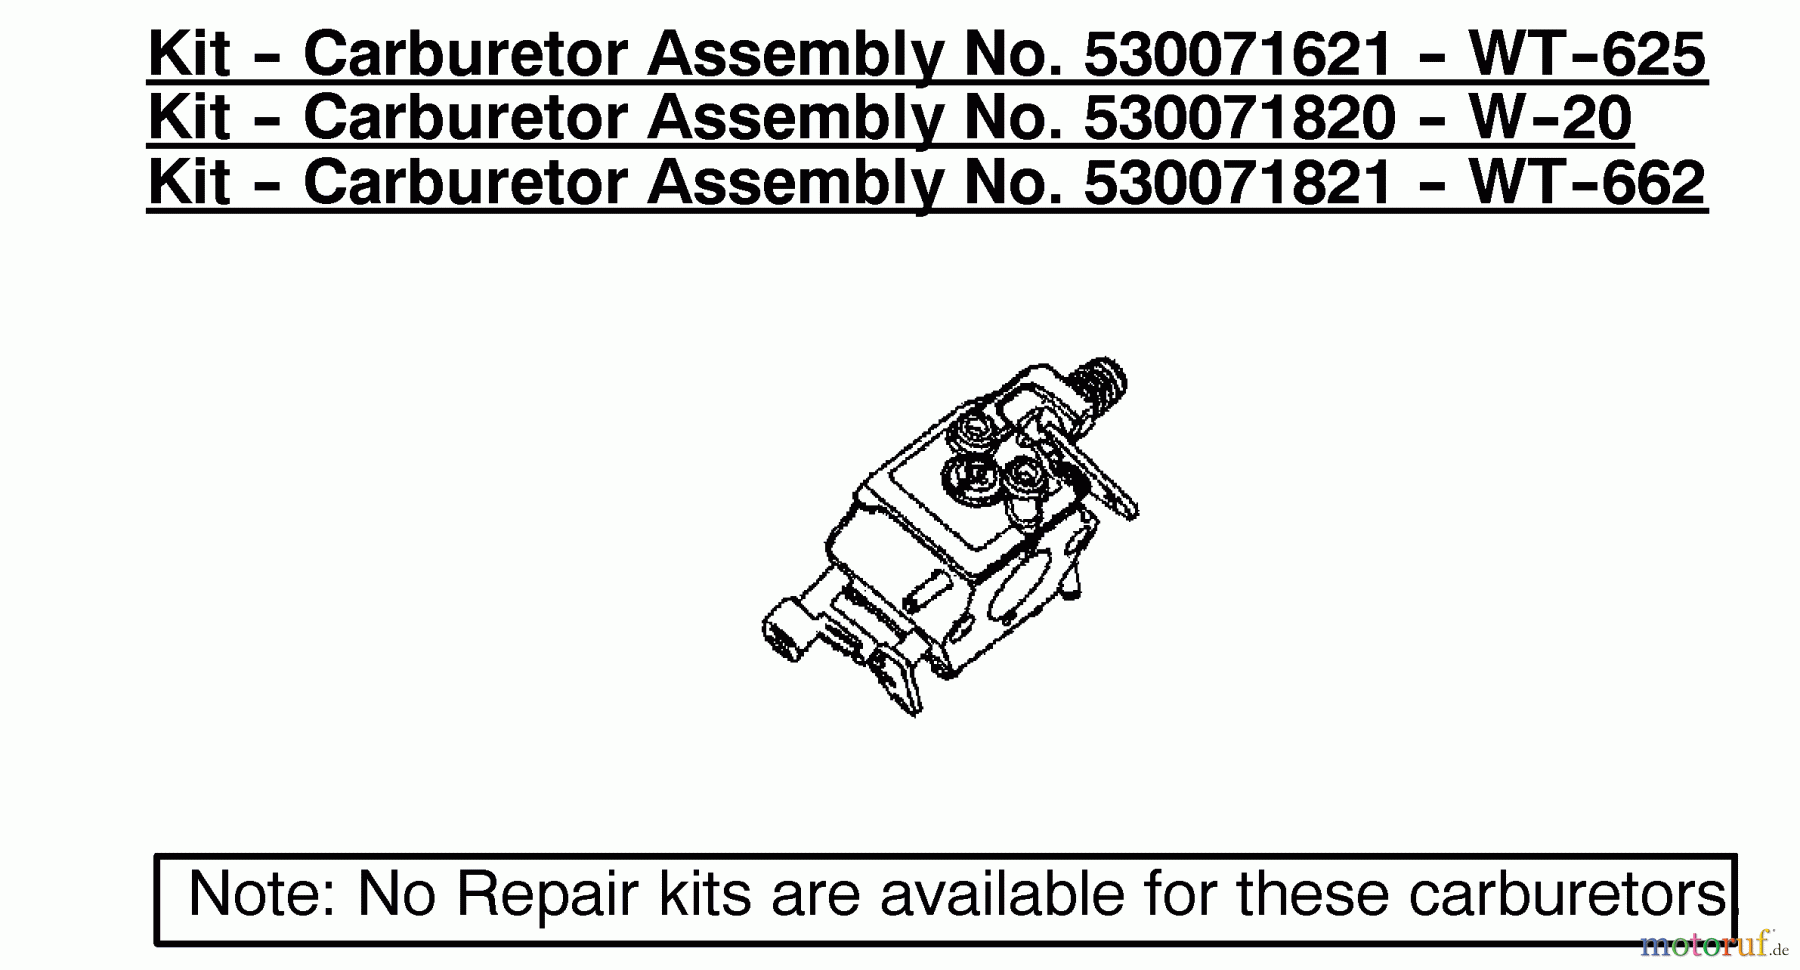  Poulan / Weed Eater Motorsägen 2250 (Type 2) - Poulan Woodmaster Chainsaw Kit - Carburetor Assembly 530071621/530071820/530071821